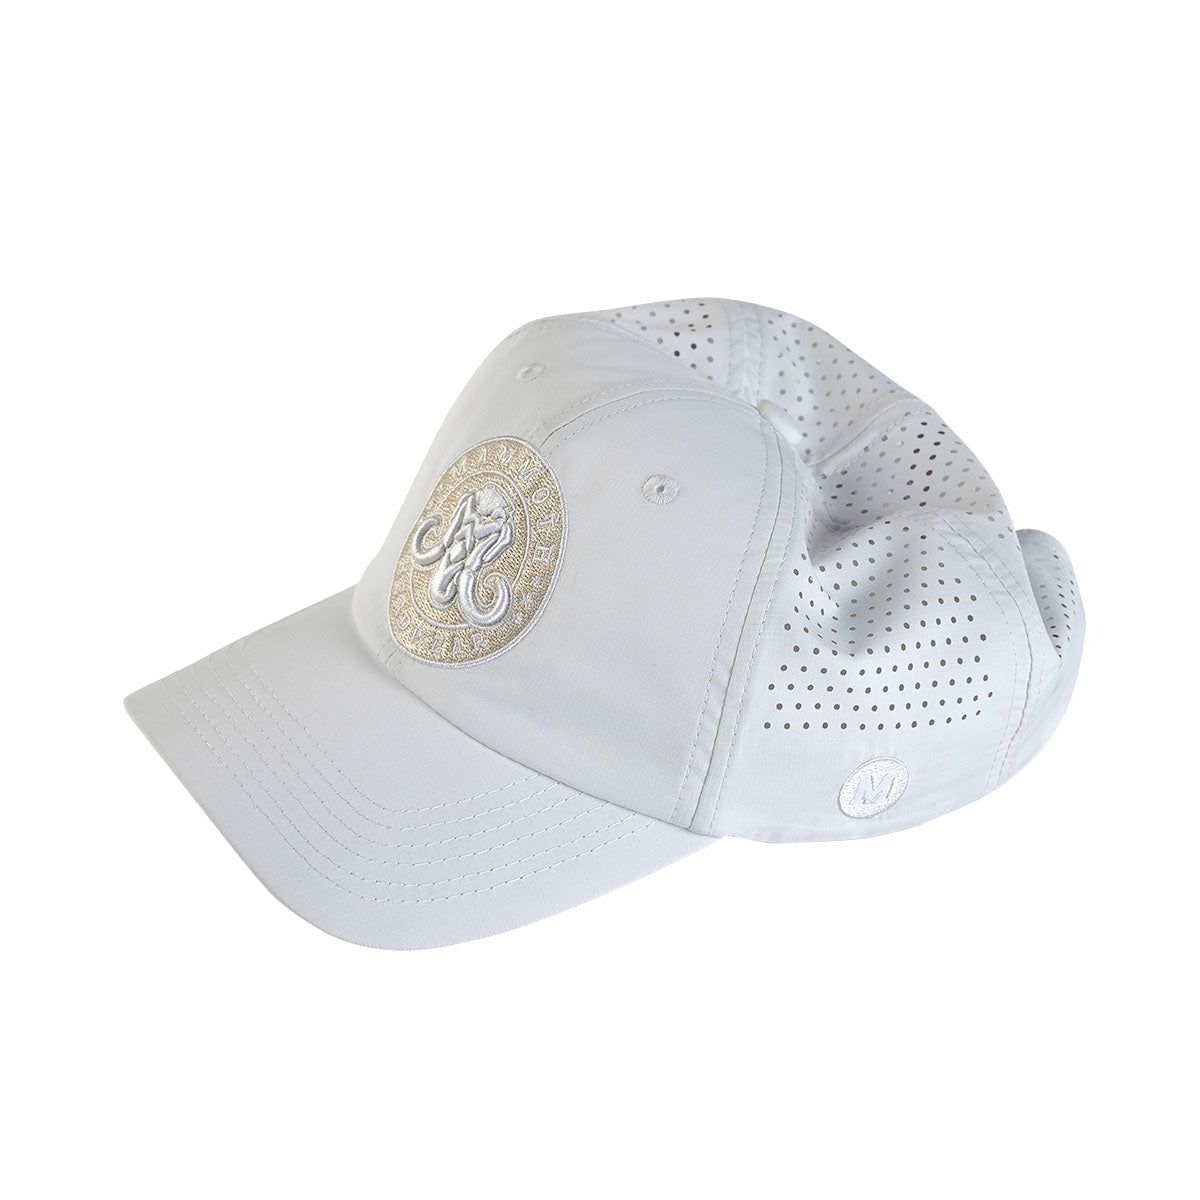 White Classic Performance Snapback Hat - Sleek & Durable